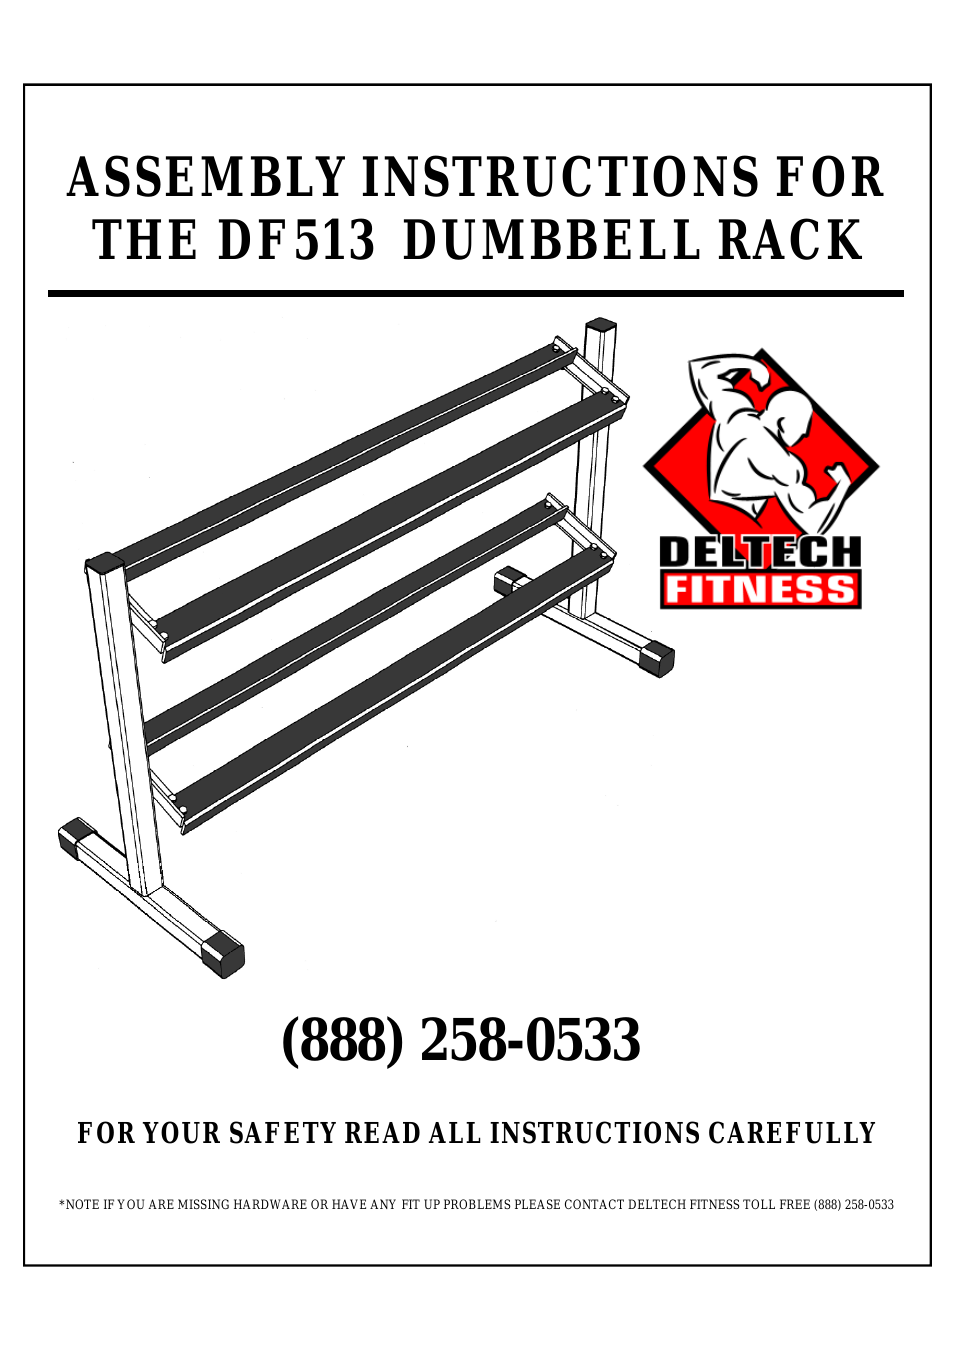 DF513- 54" Two-Tier Dumbbell Rack